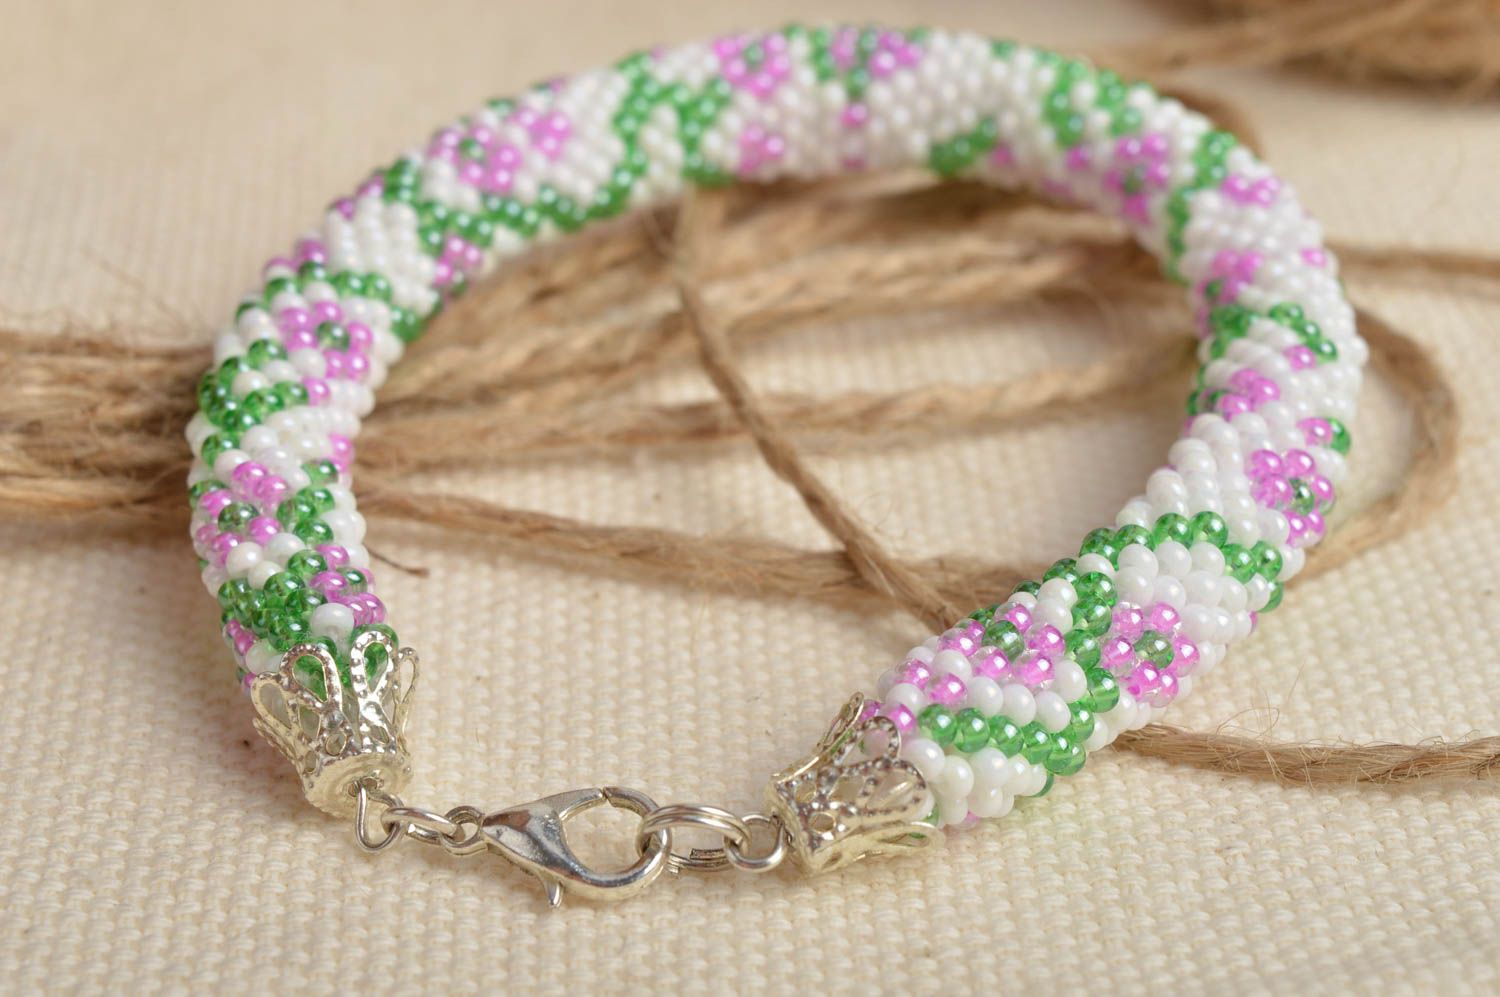 Festive white flower bracelet beaded cord bracelet stylish wrist accessory photo 1